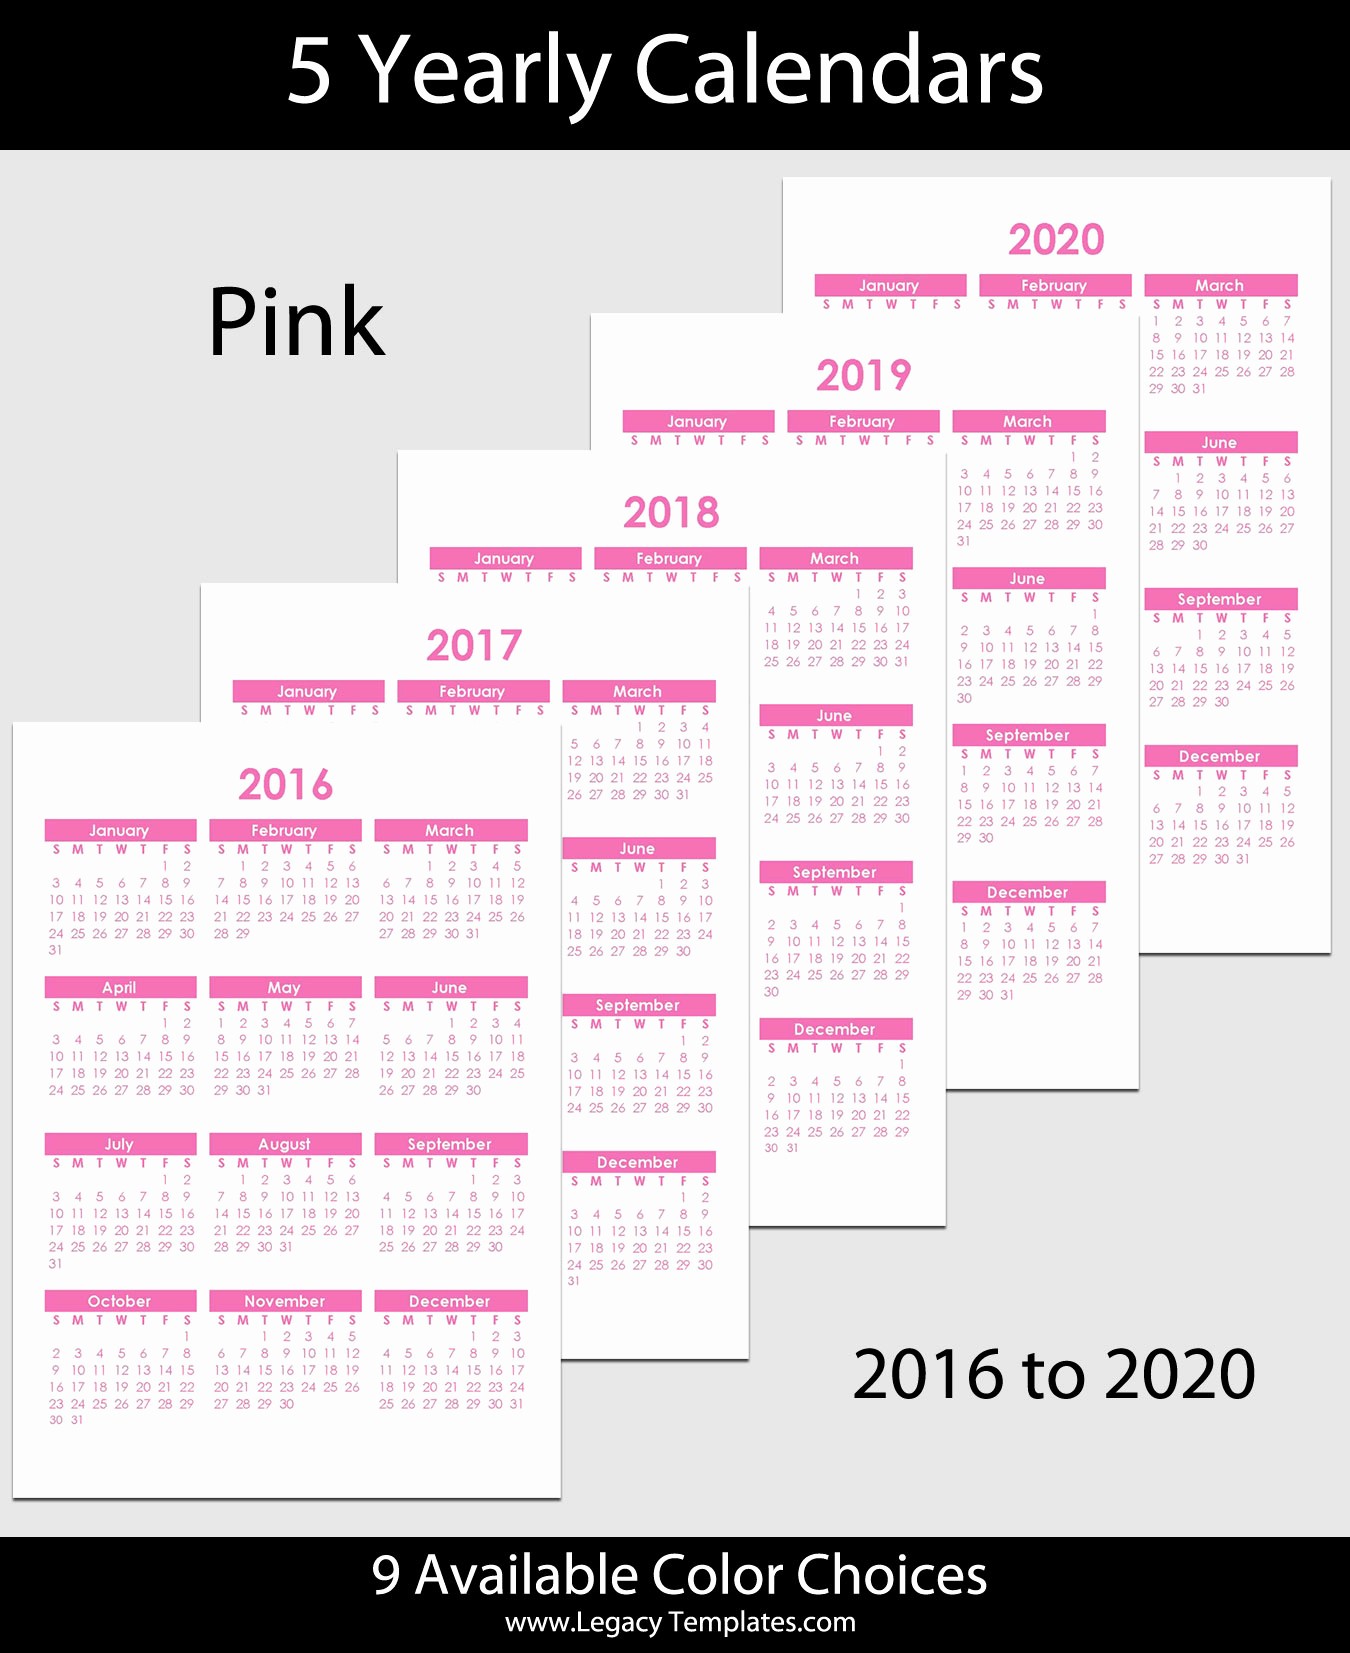 5 Year Calendar Starting 2016 Inspirational 2016 to 2020 Yearly Calendar – A5